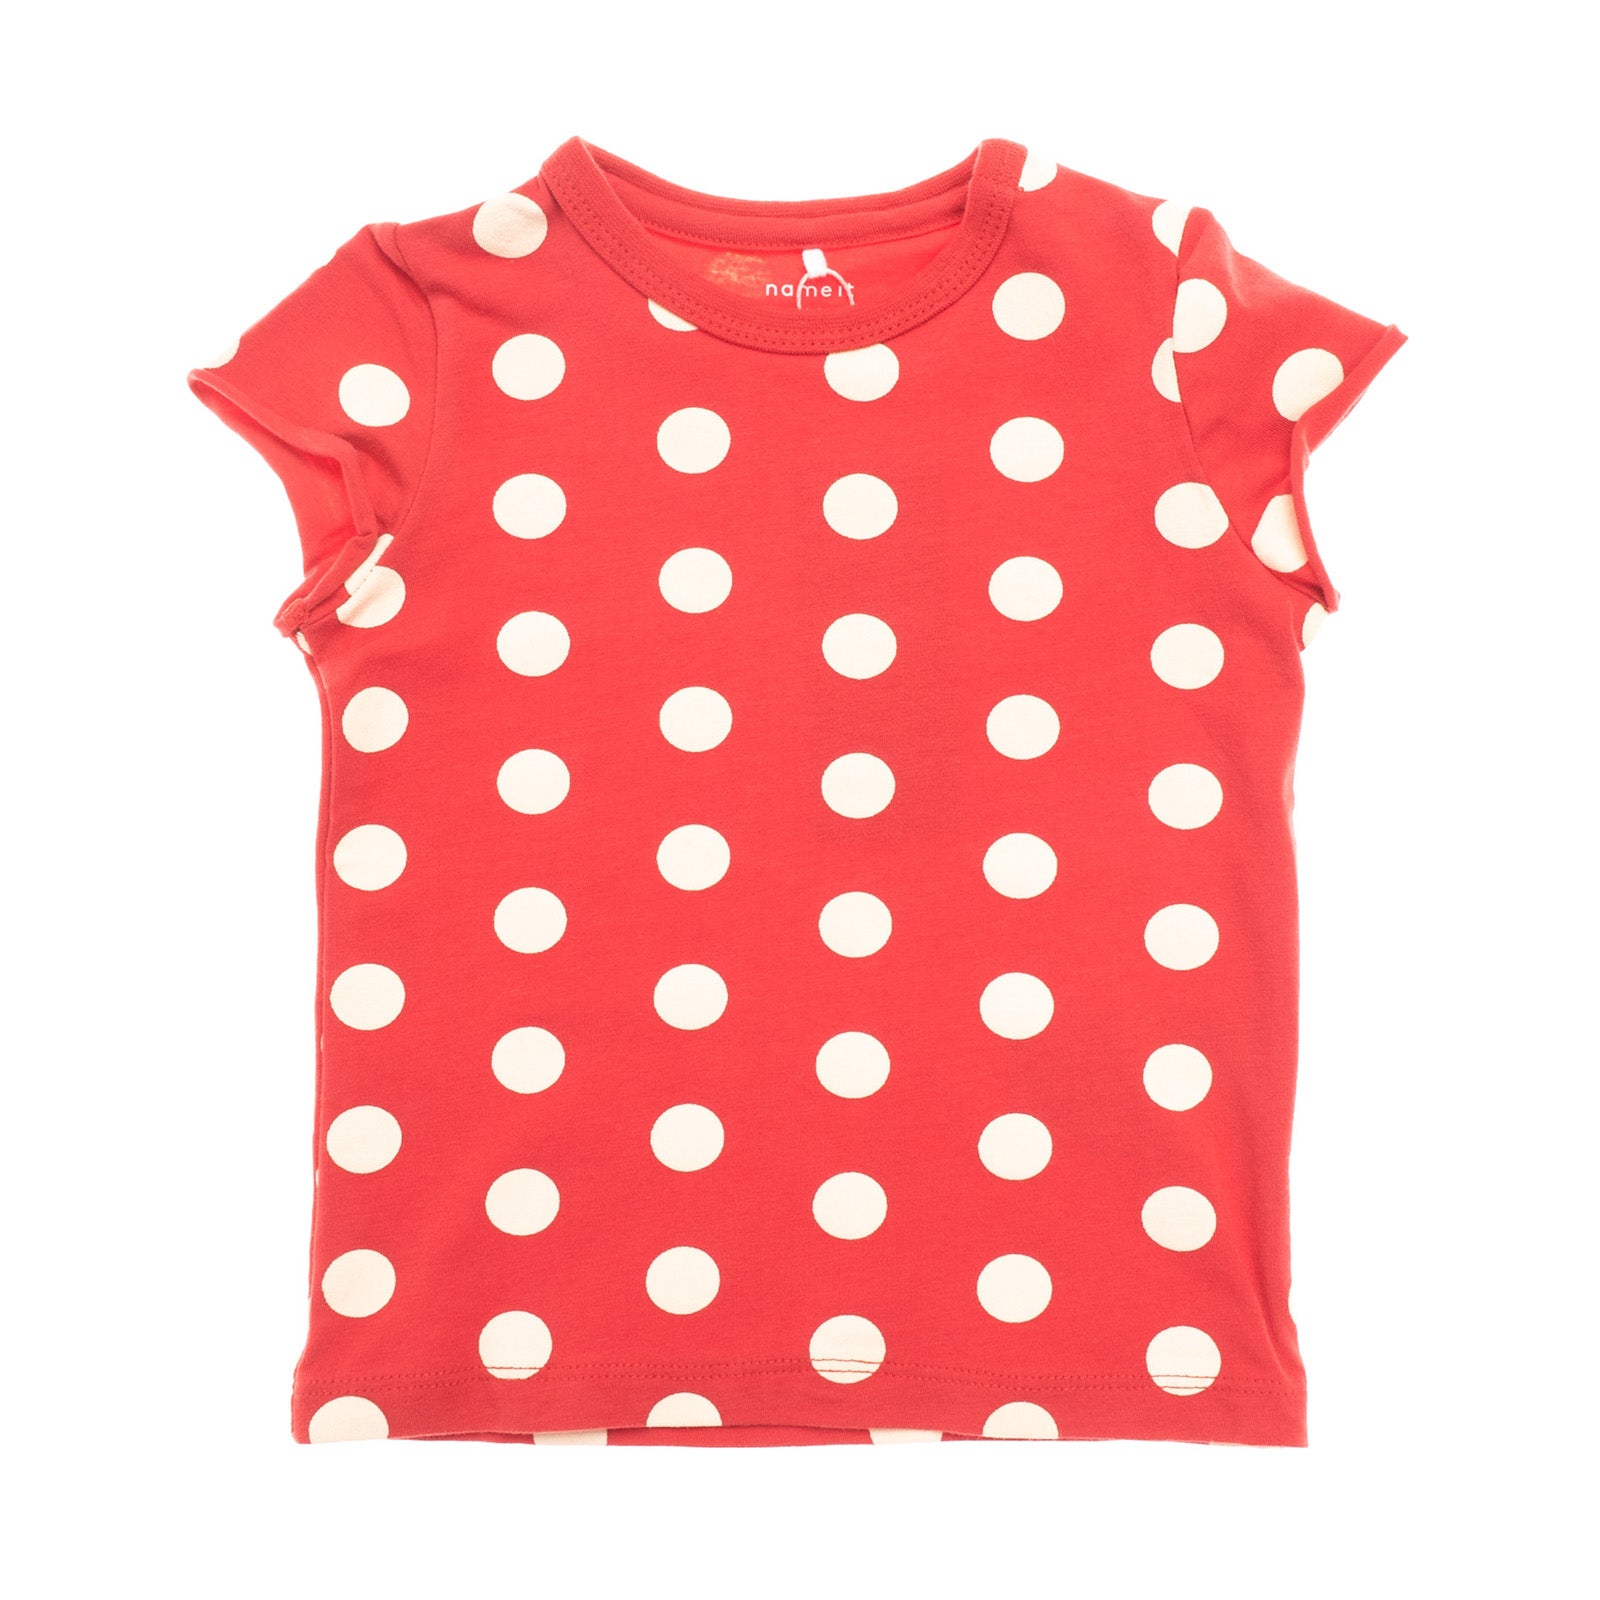 NAME IT MINIMIZE T-Shirt Top Size 6-9M / 74CM Polka Dot Pattern Short Sleeve gallery main photo